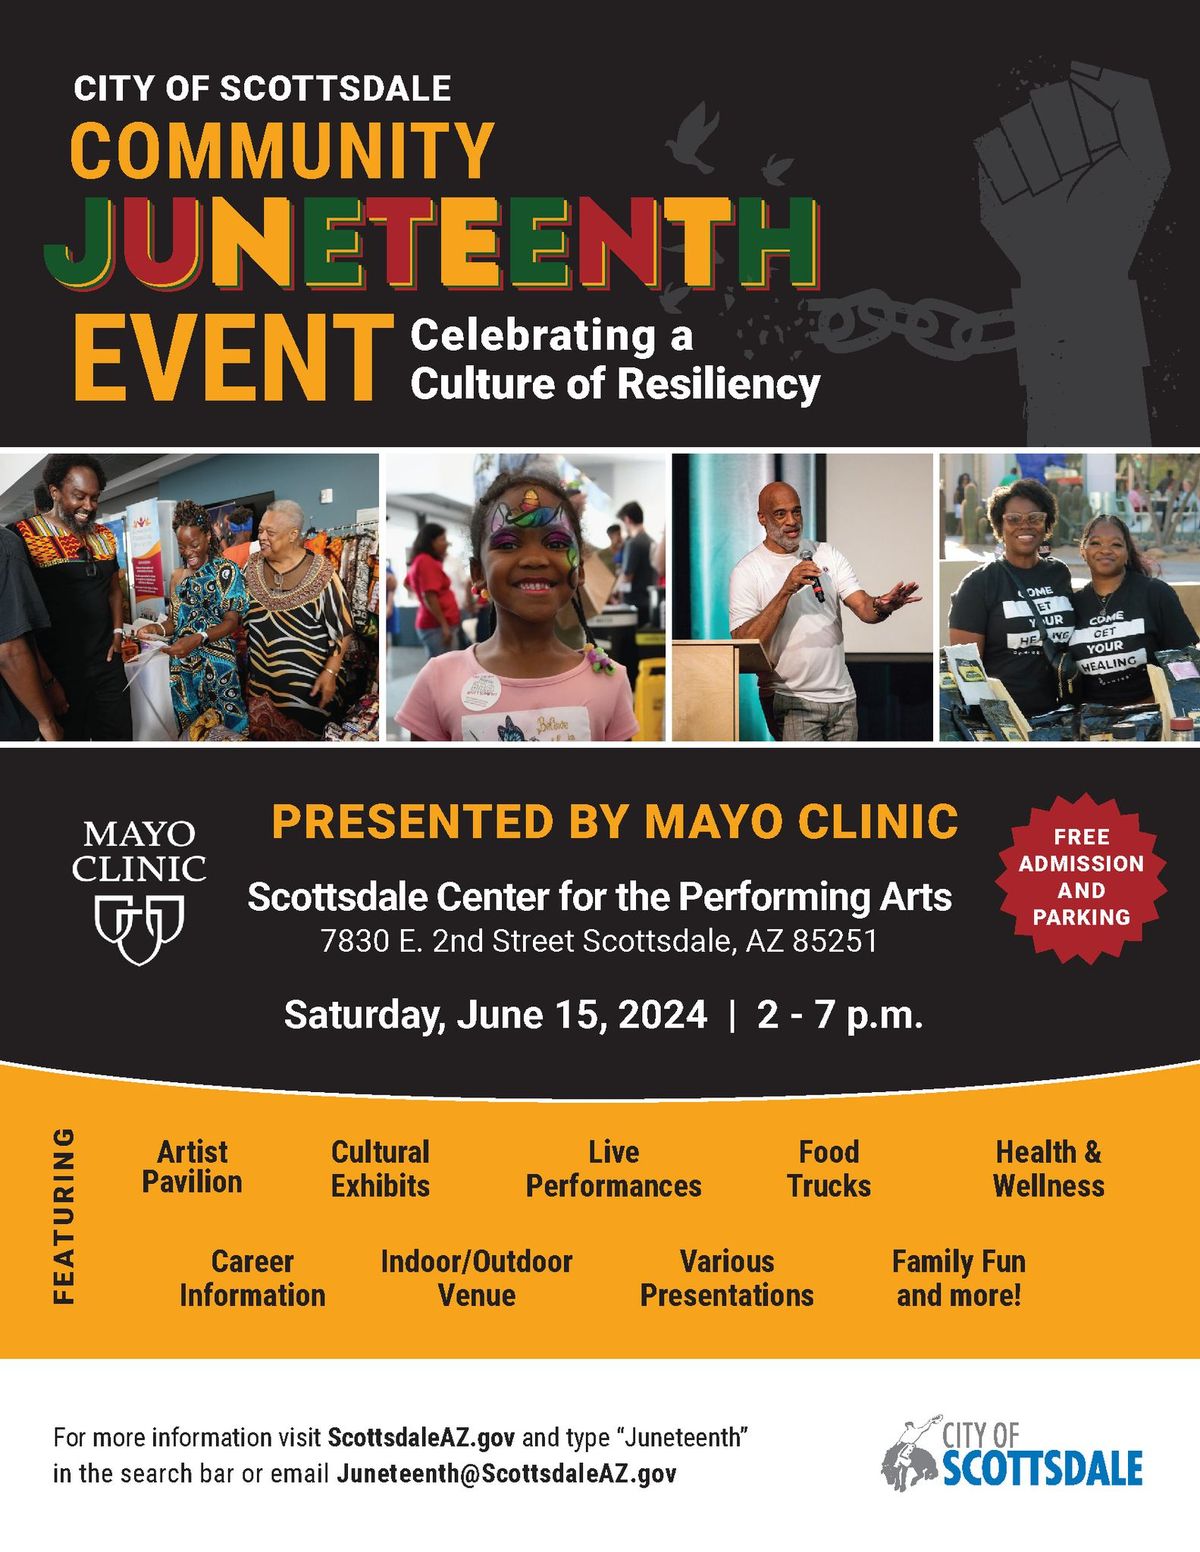 City of Scottsdale's Community Juneteenth Event